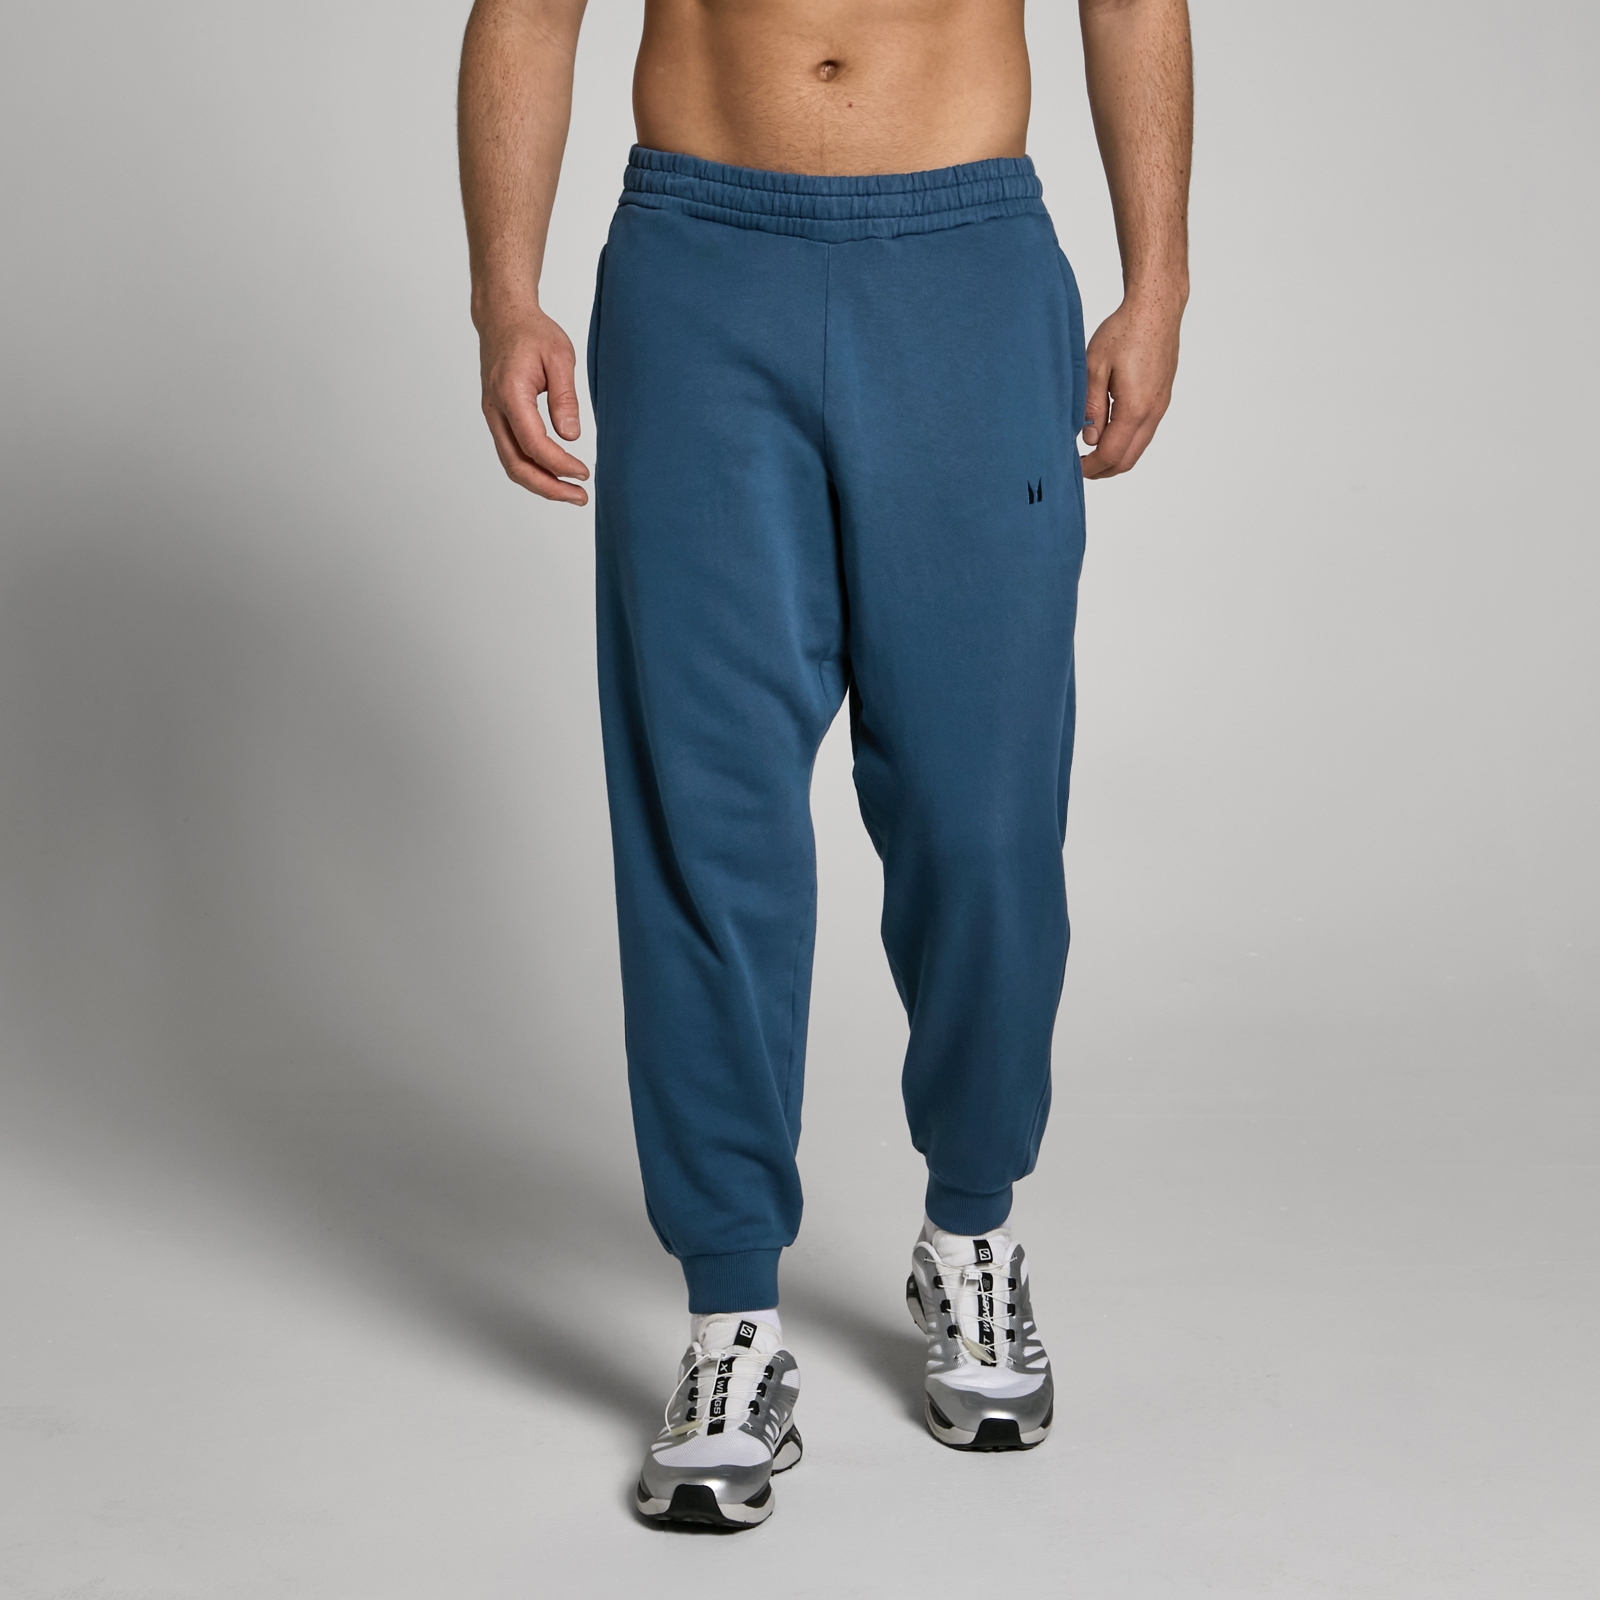 Image of Pantaloni da jogging slavati MP Tempo da uomo - Blu navy slavato - M